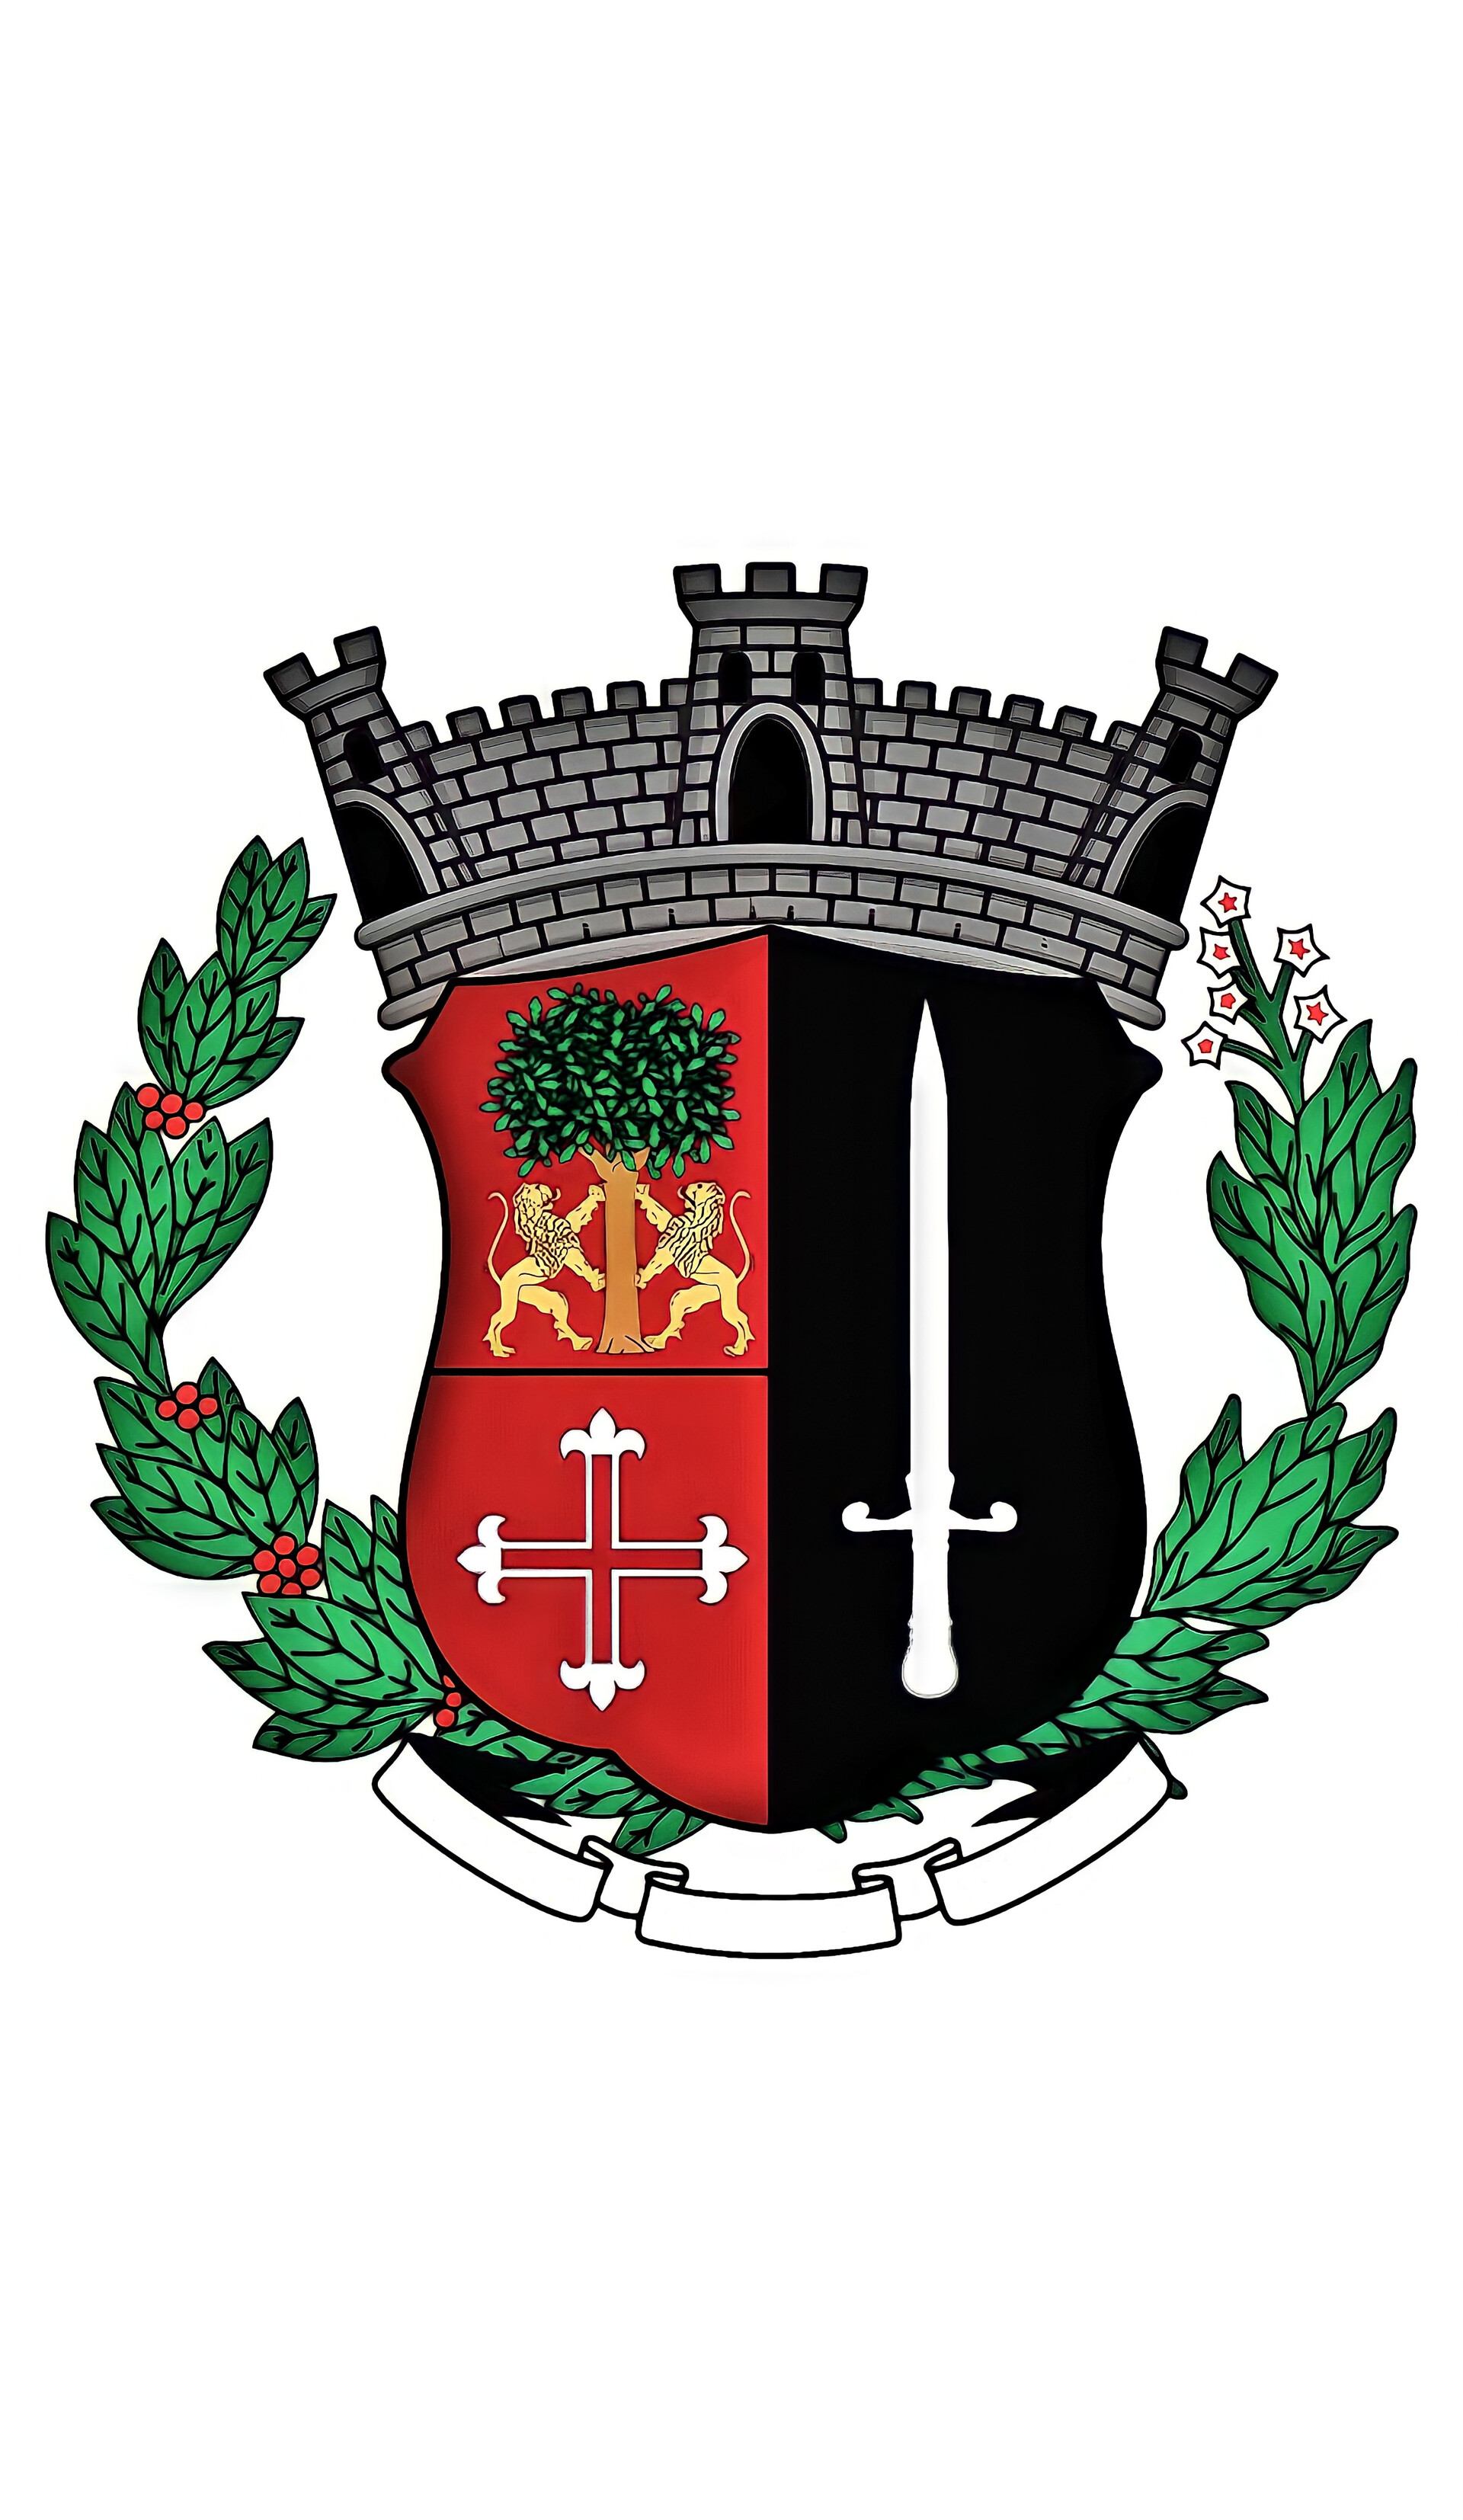 ArtStation - coat of arms